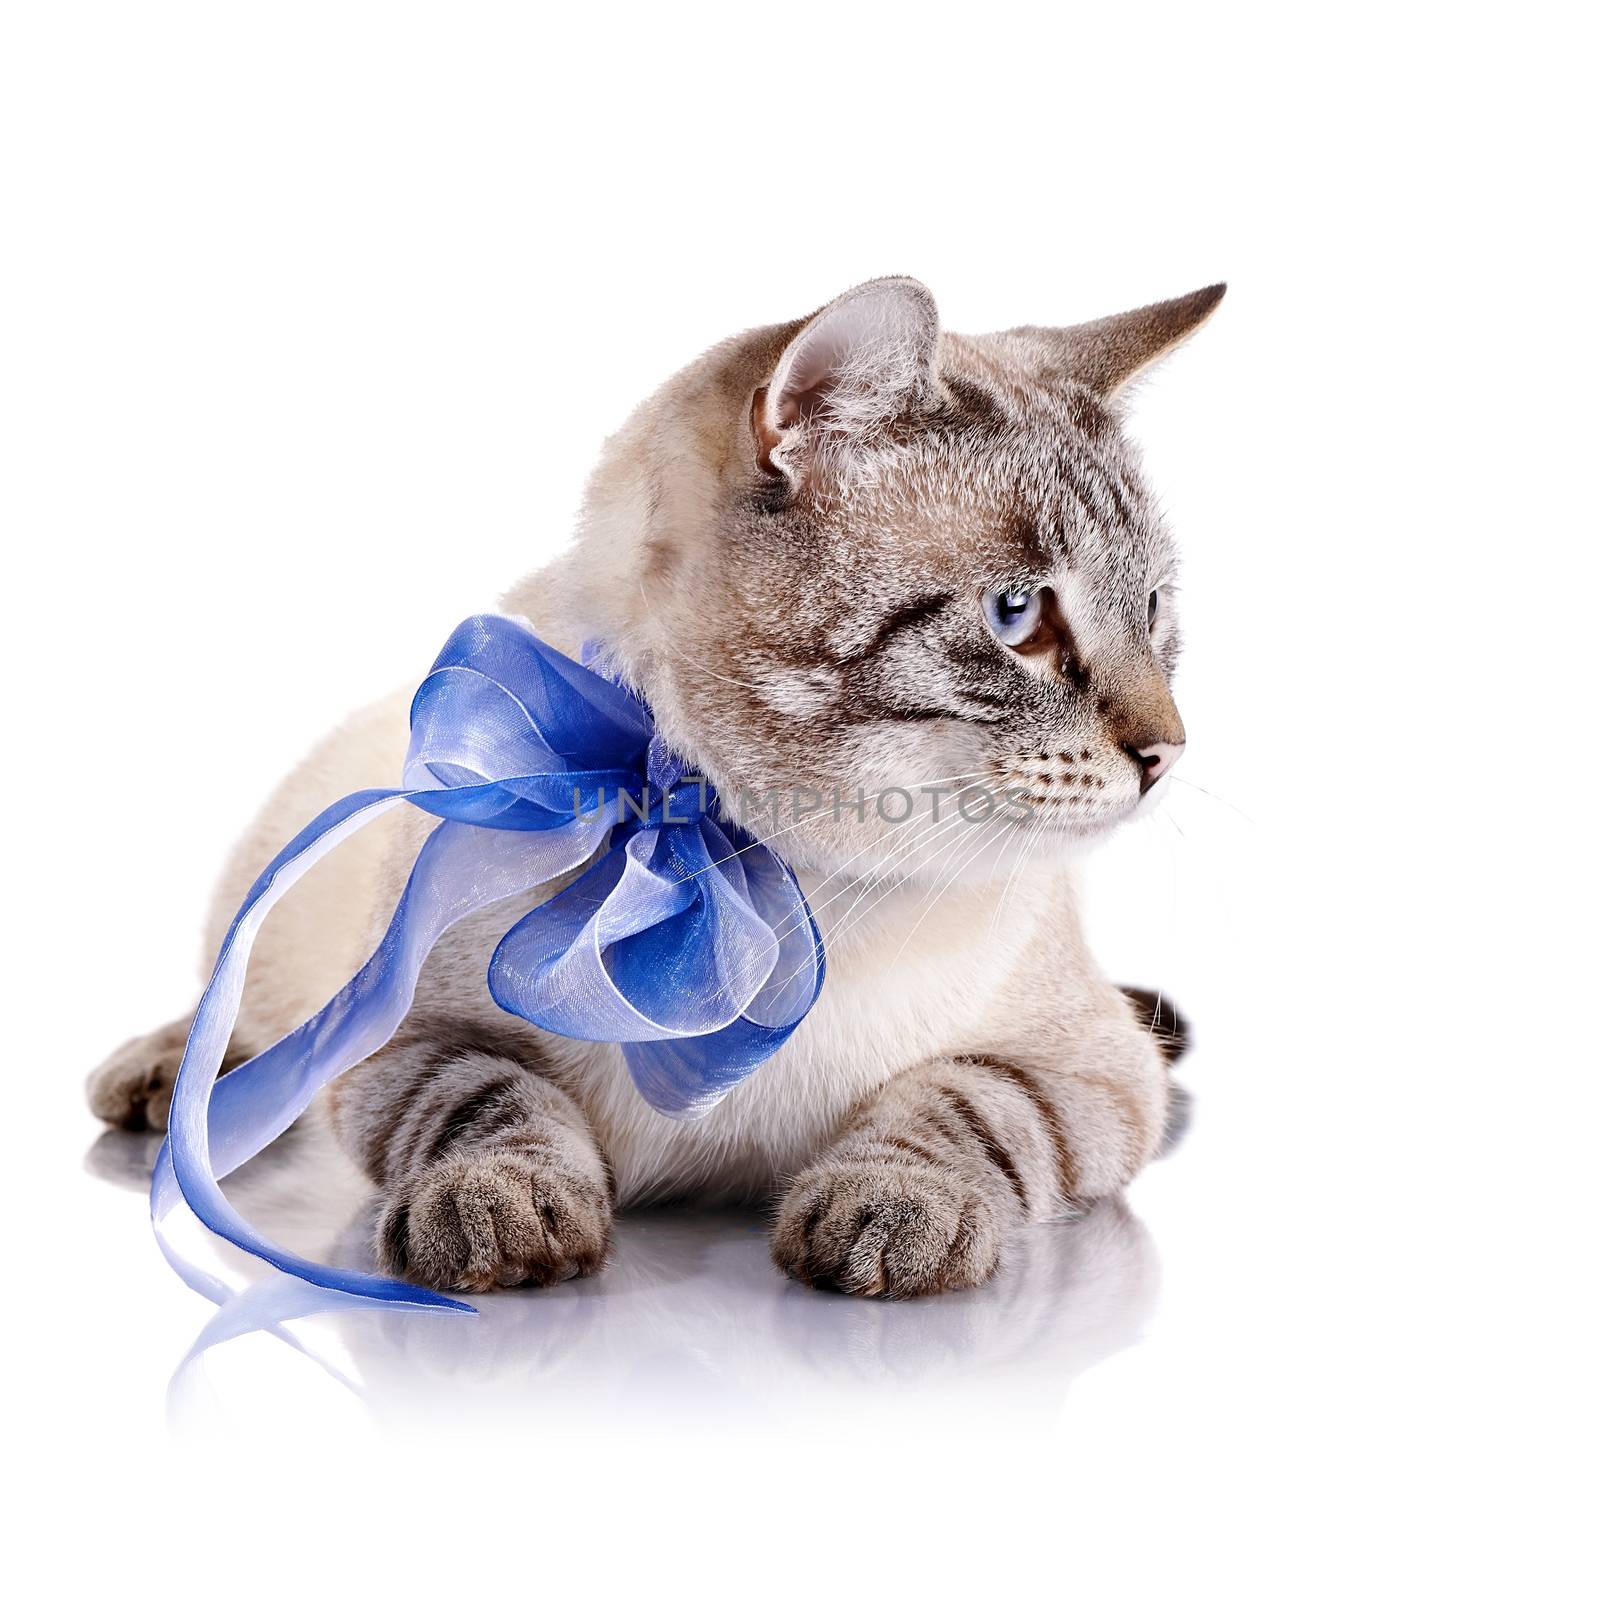 Striped cat with a blue bow. by Azaliya